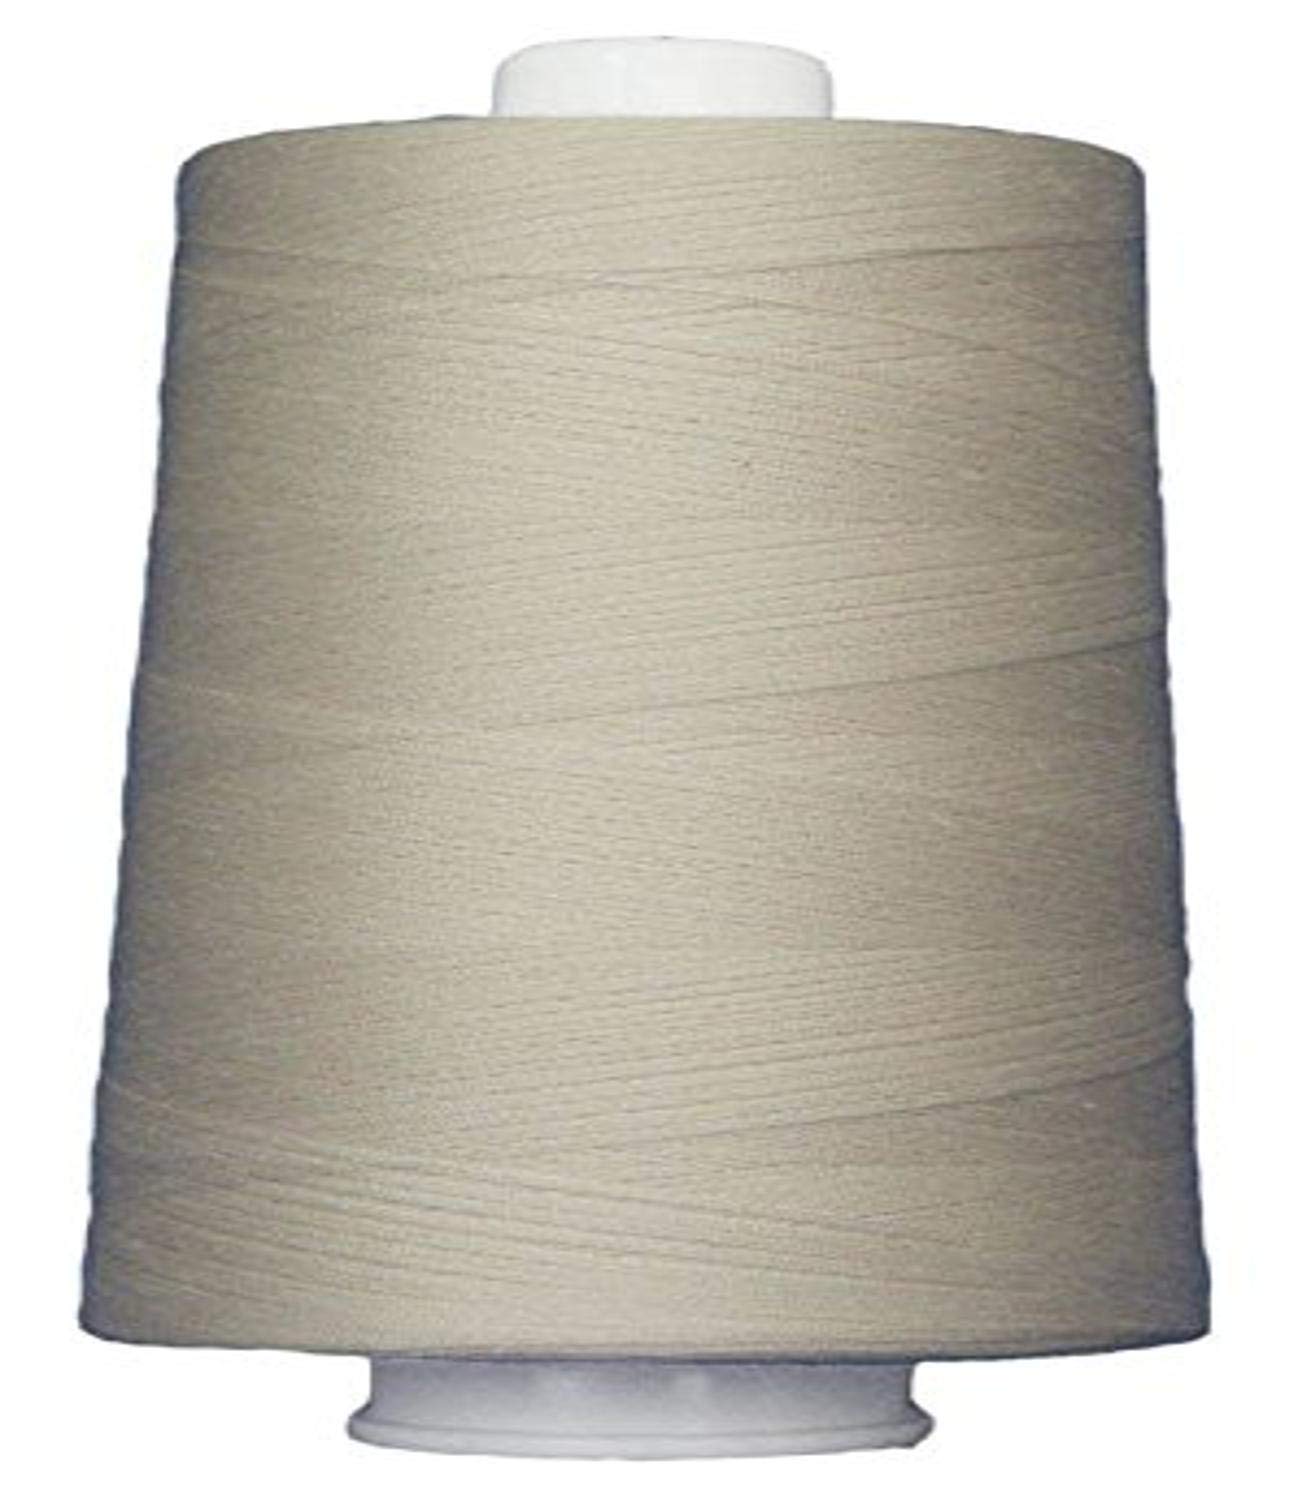 Superior Threads Omni Polyester Thread, 6000 yd, Cream